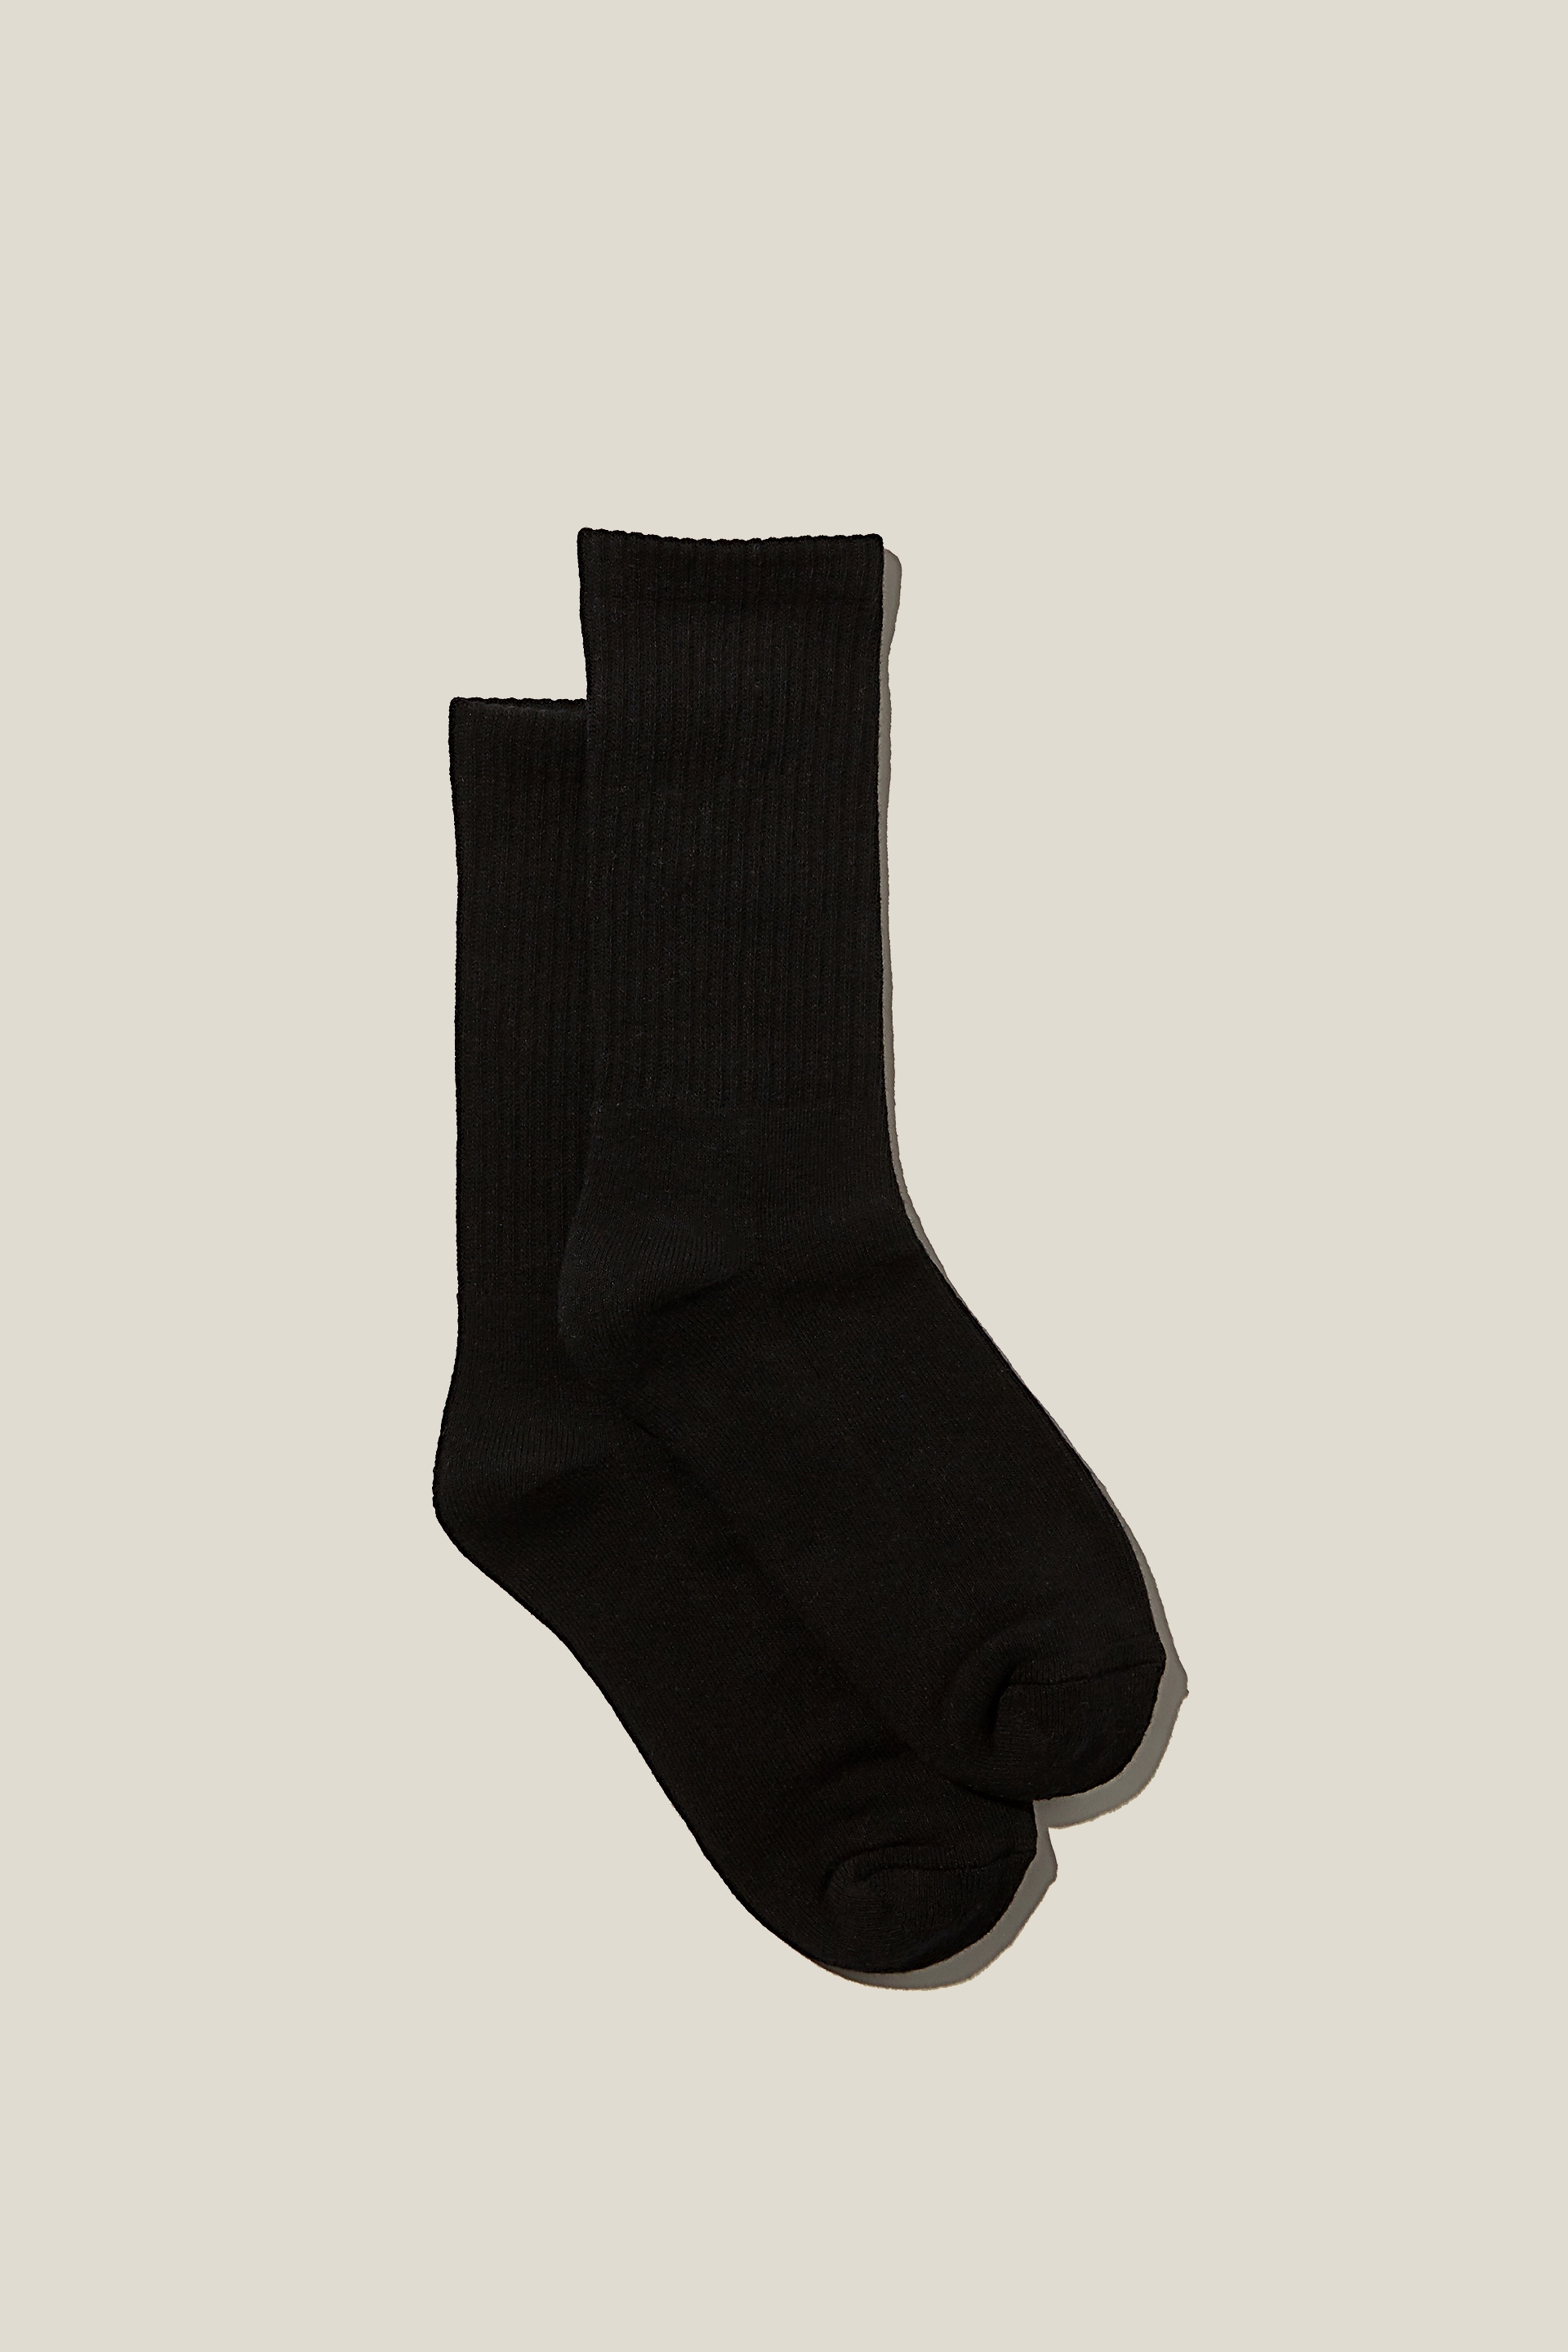 Rubi - Club House Crew Sock - Solid black